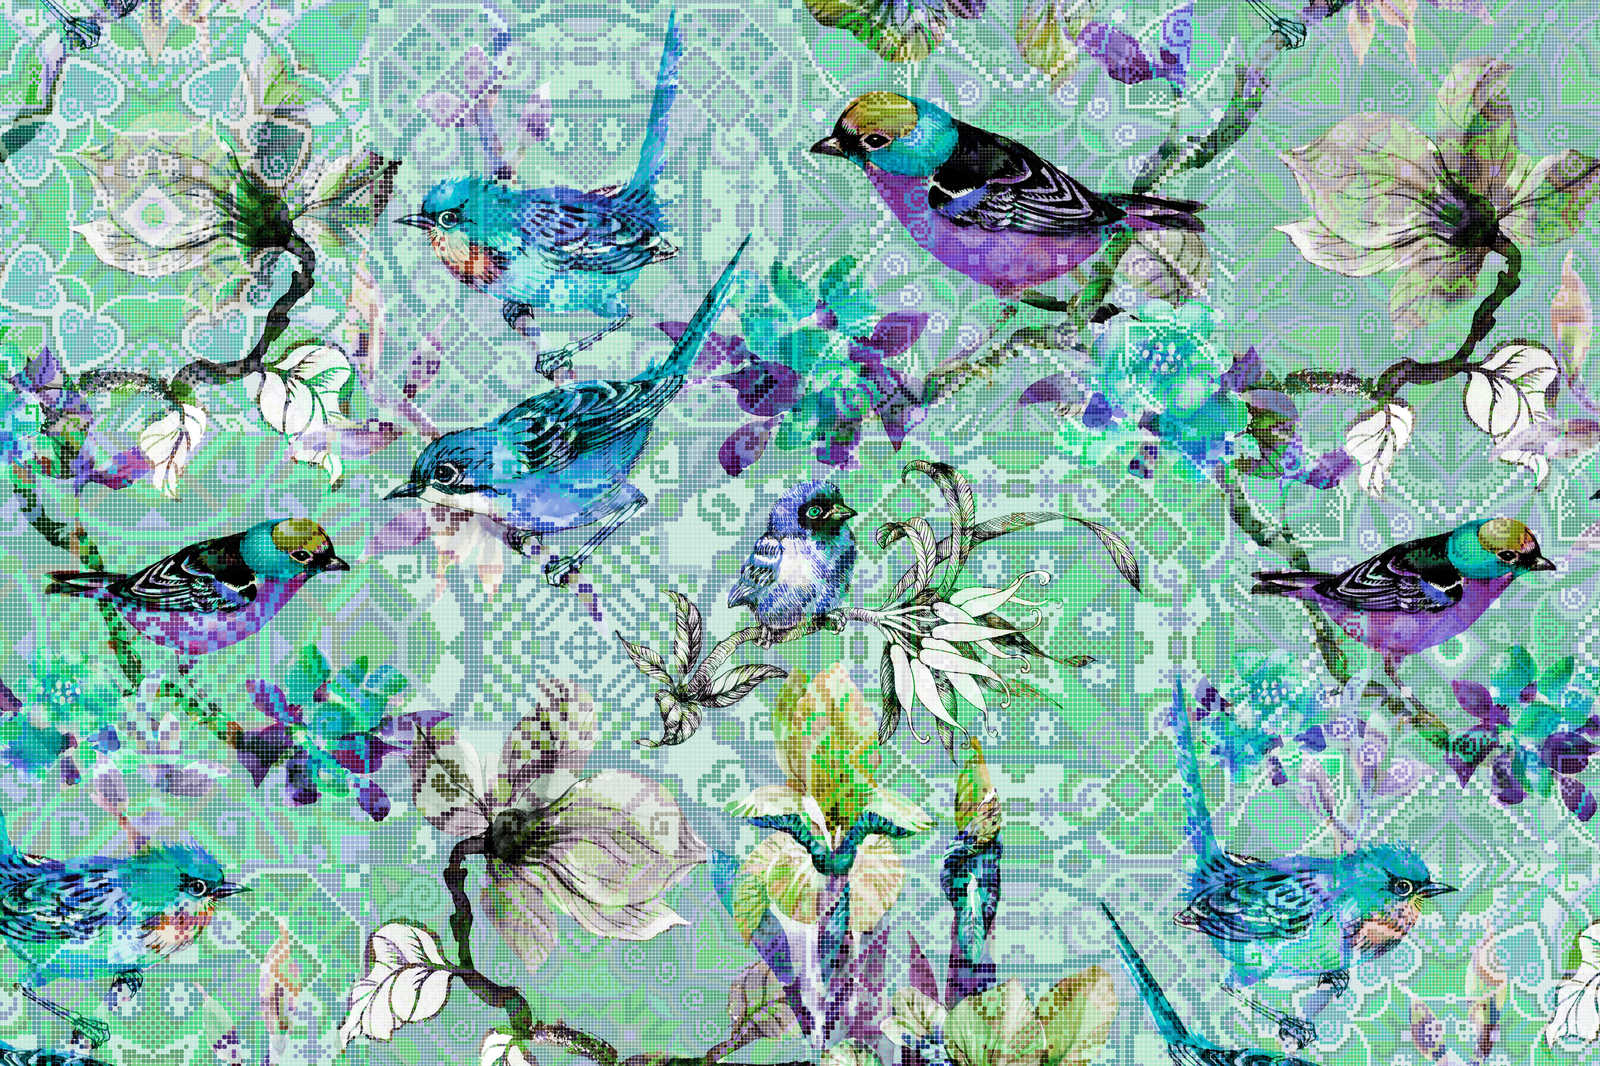             Quadro su tela con uccelli a mosaico | uccelli a mosaico 3 - 0,90 m x 0,60 m
        